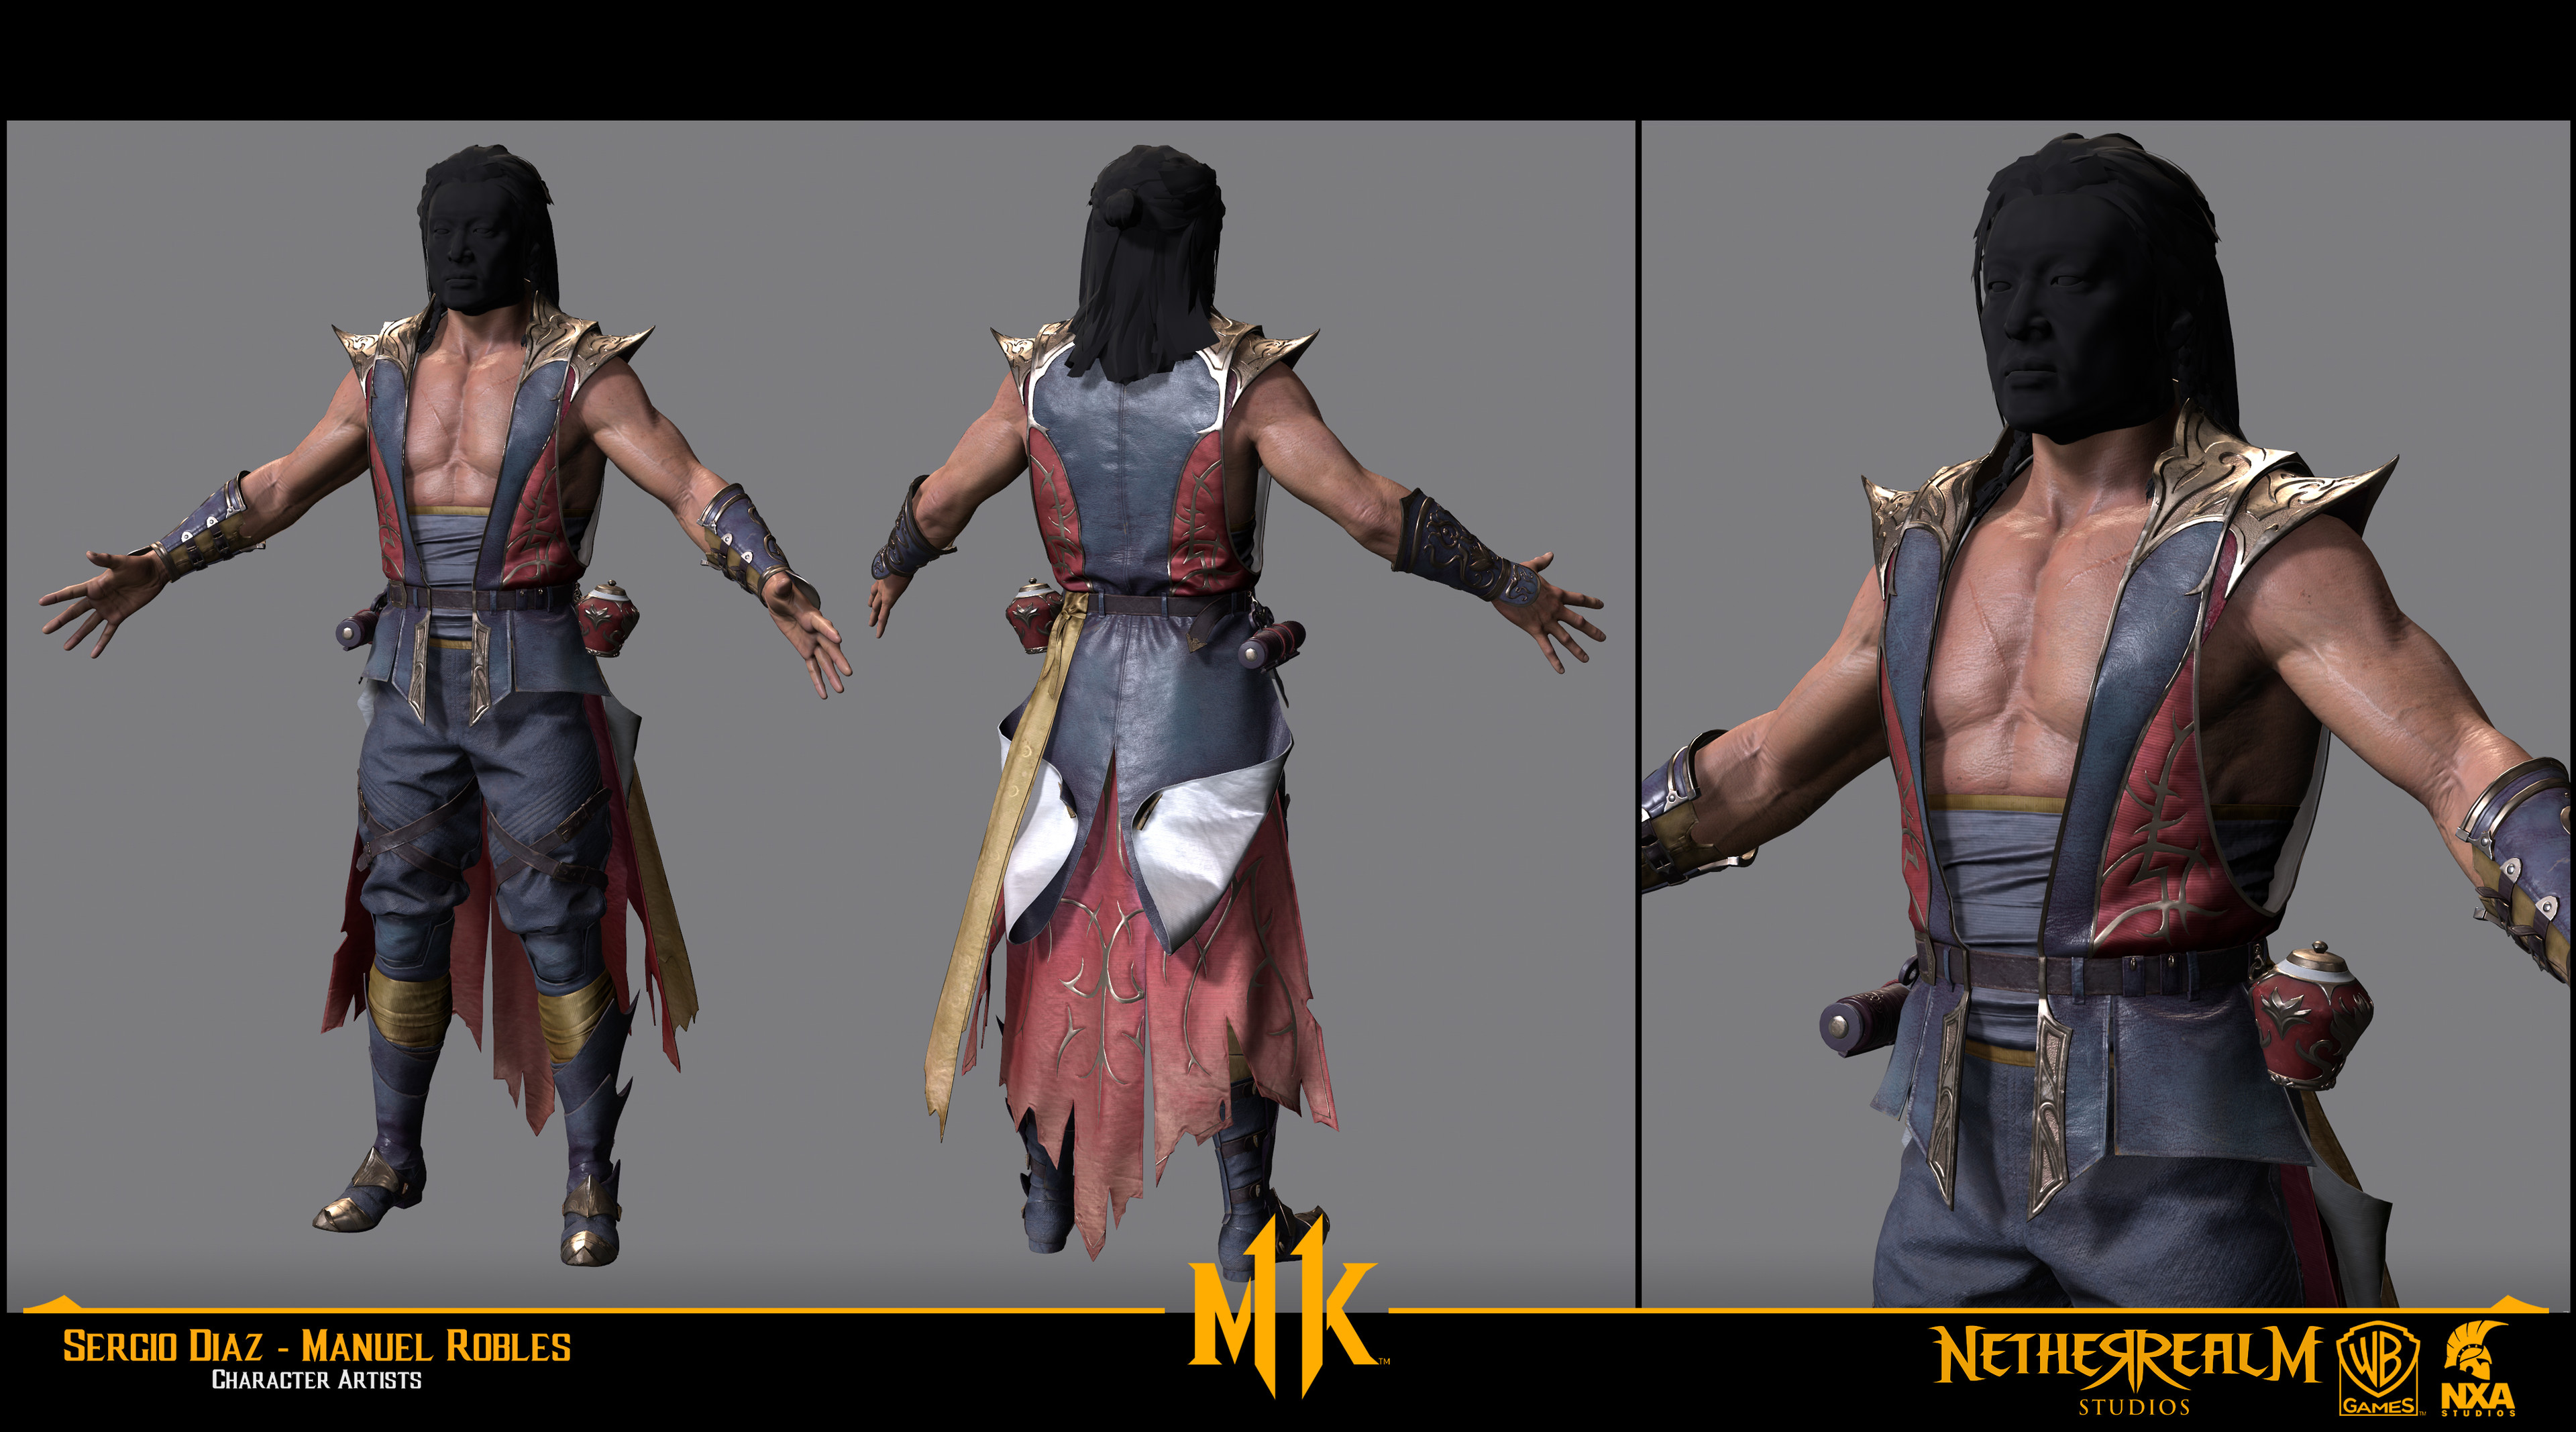 Shang Tsung  Mortal kombat characters, Mortal kombat art, Mortal kombat x